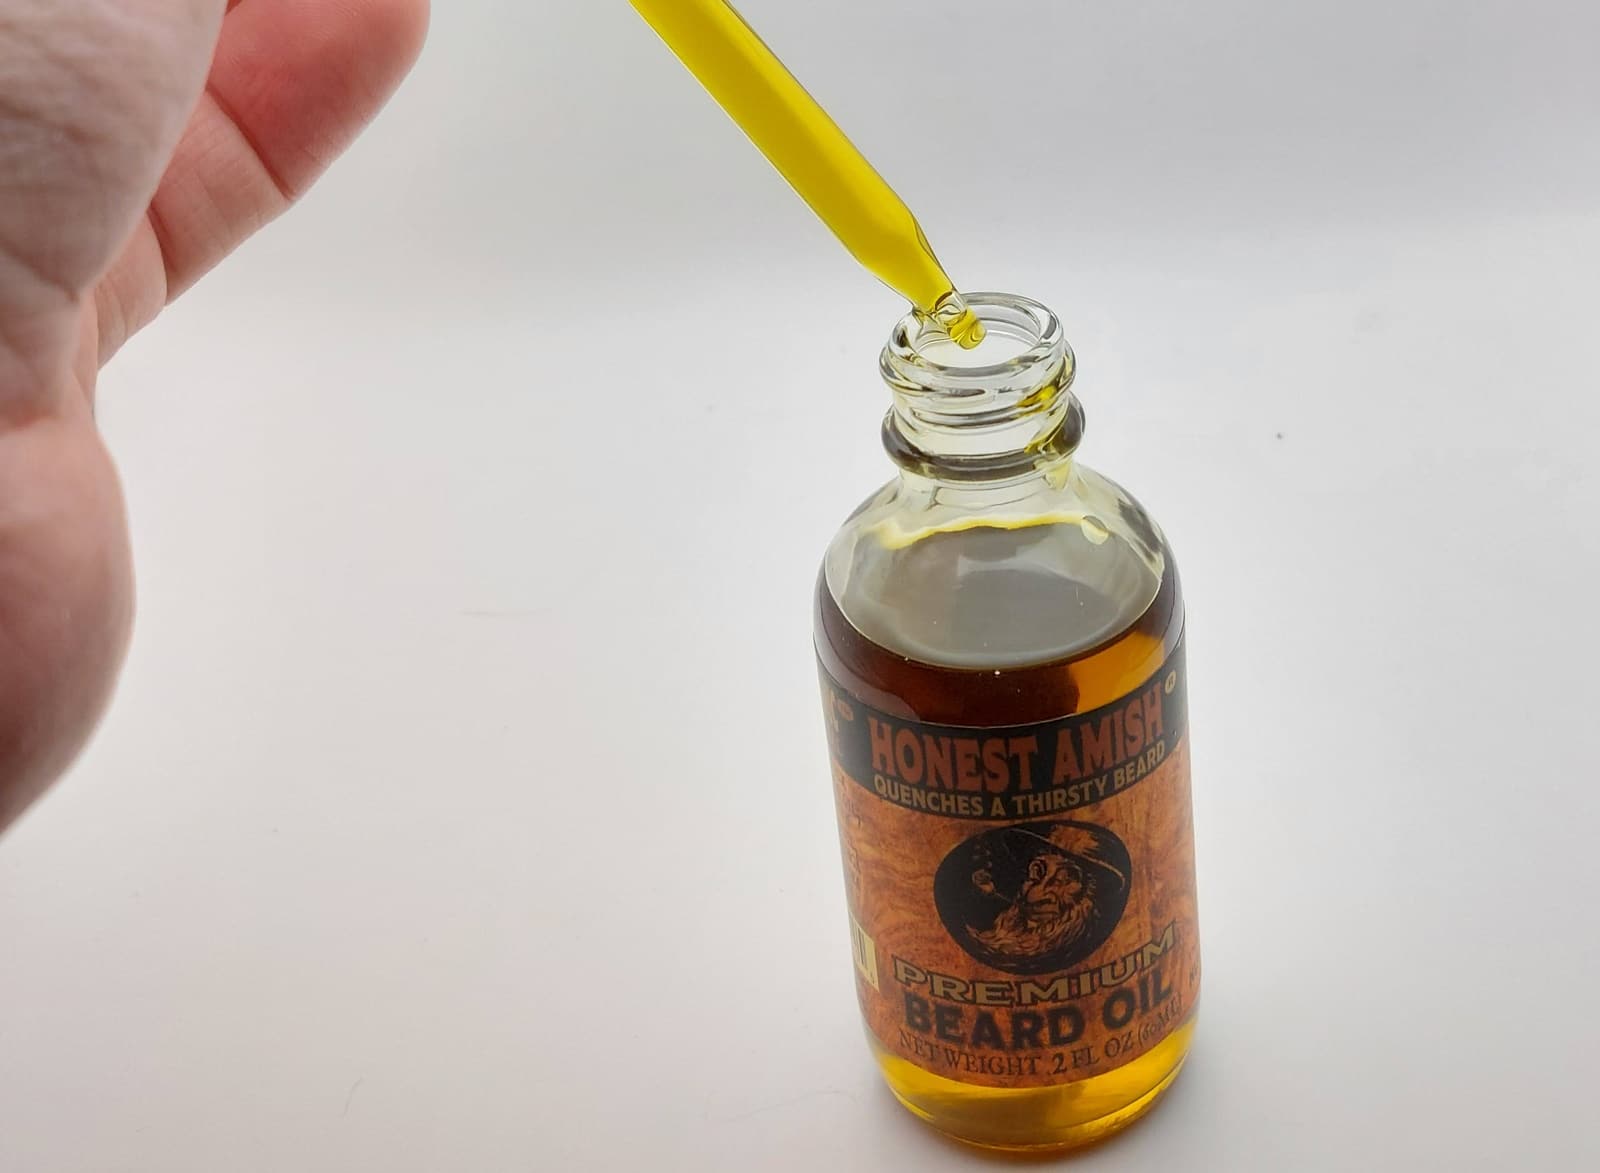 using the dropper of the Honest Amish Premium Beard Oil bottle